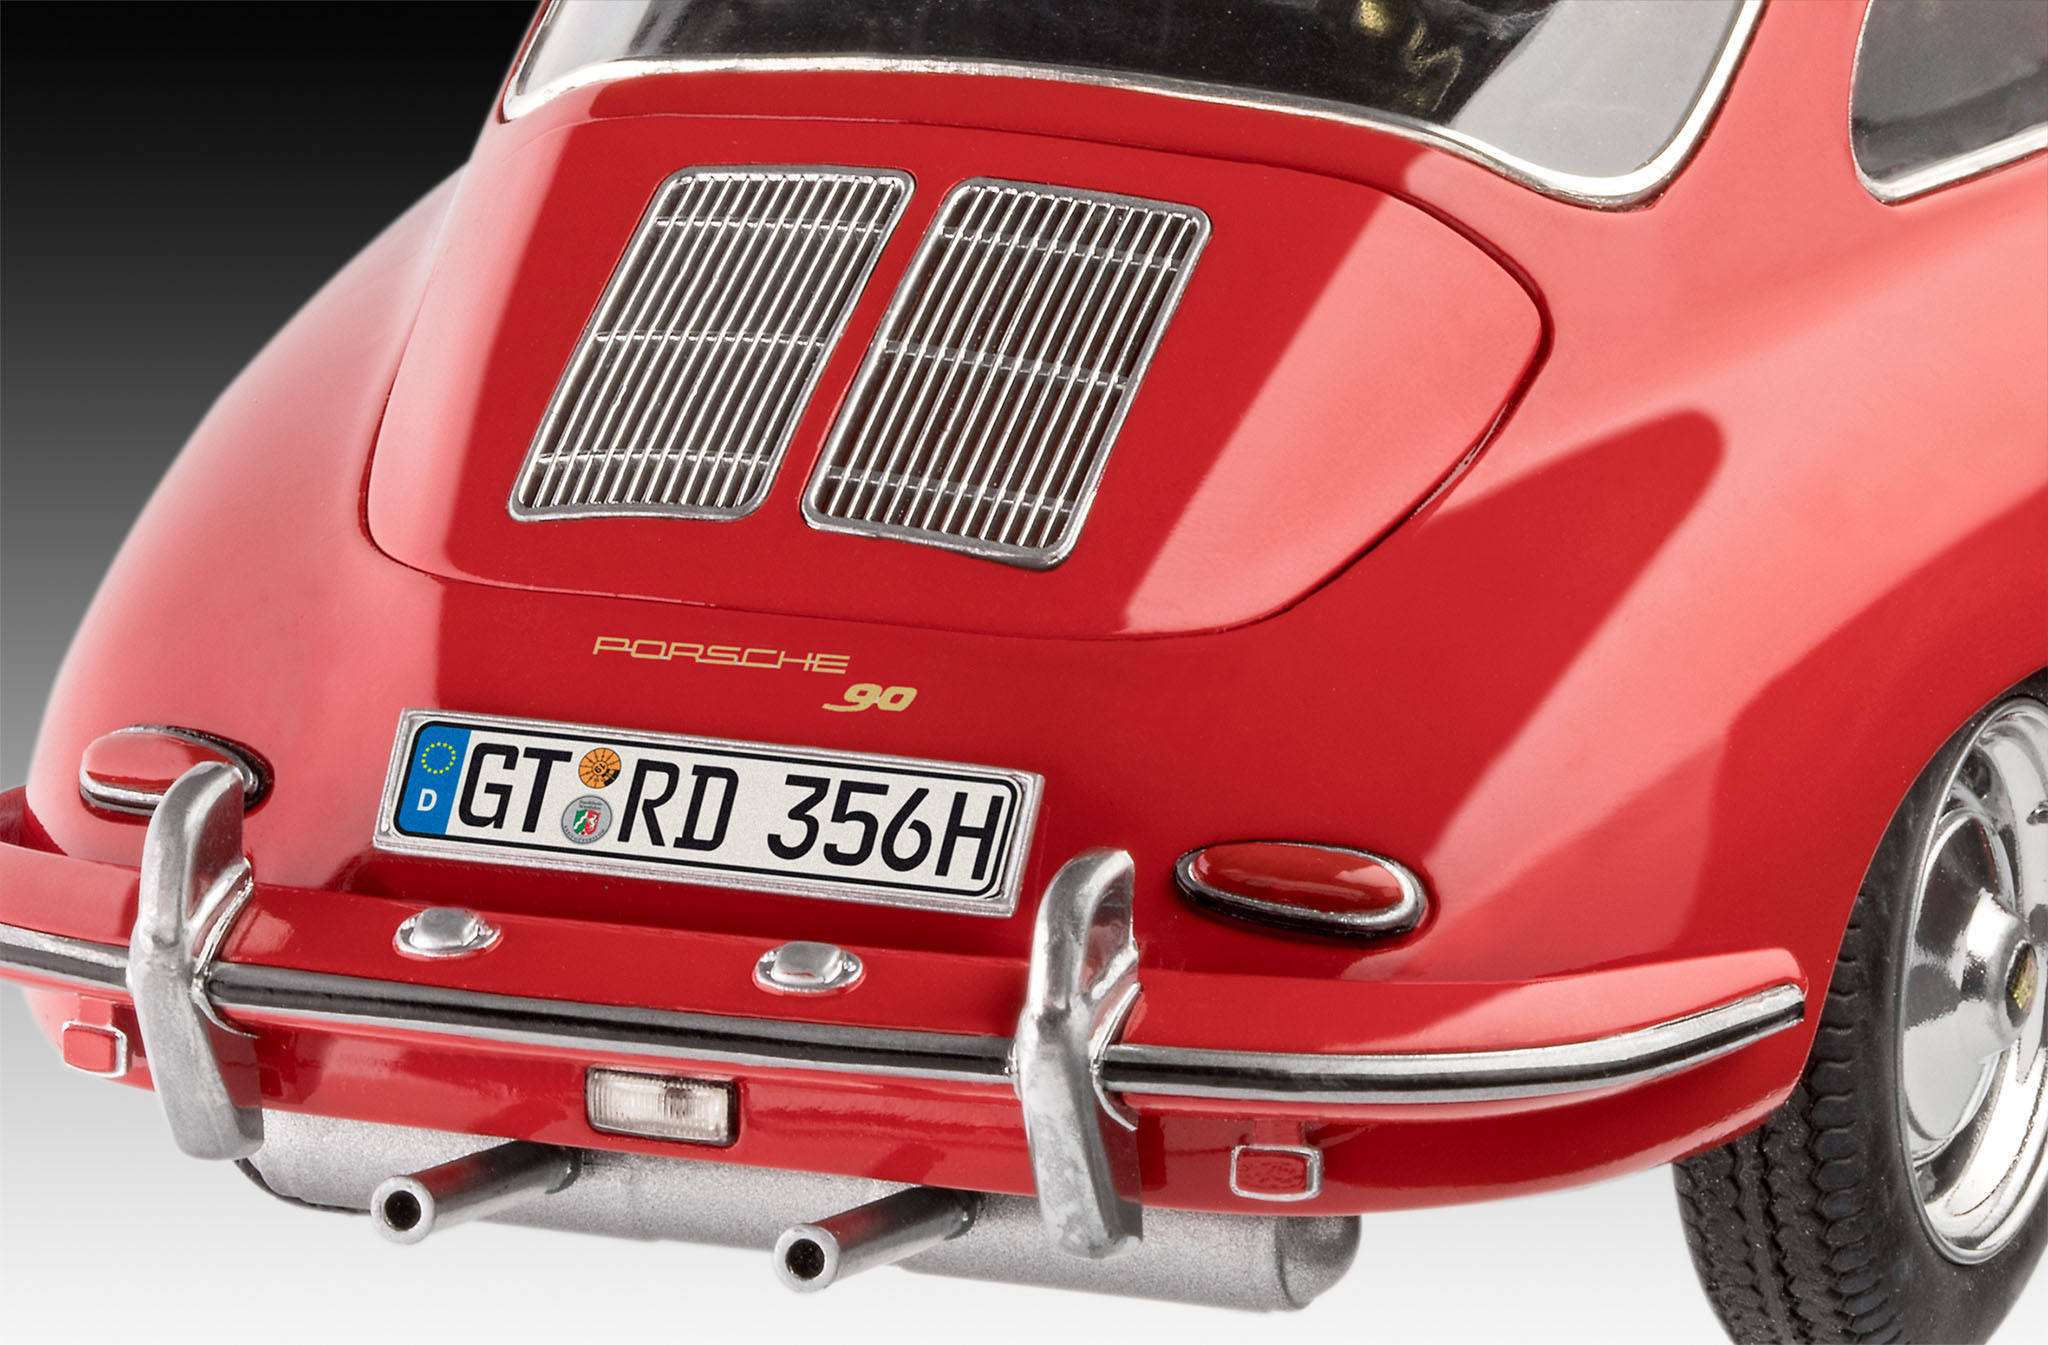 REVELL Porsche 356 Coupe Mehrfarbig Modellbausatz